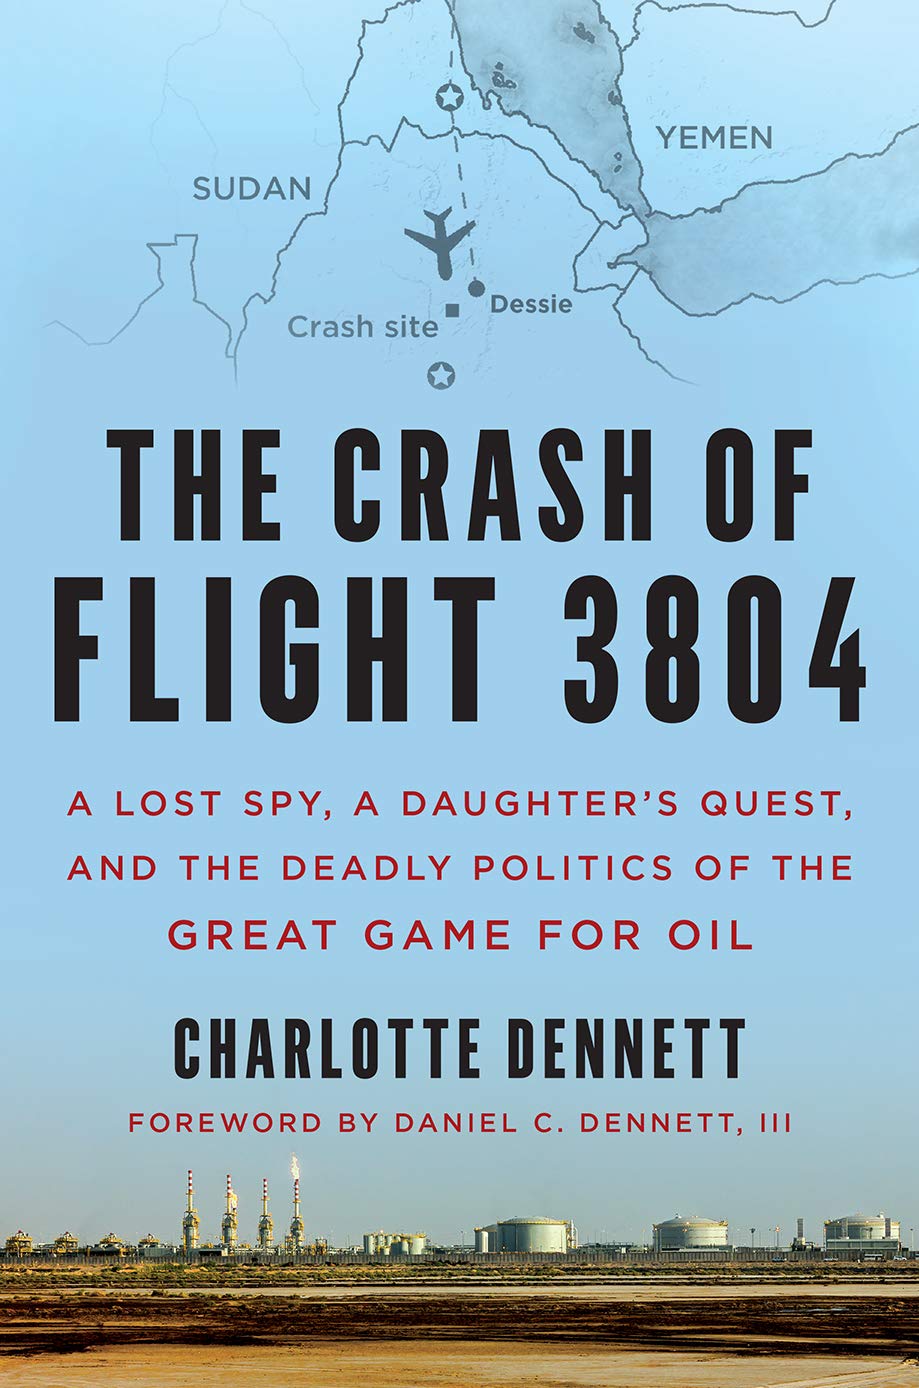 Book cover for 'The Crash of Flight 3804' by Charlotte Dennett